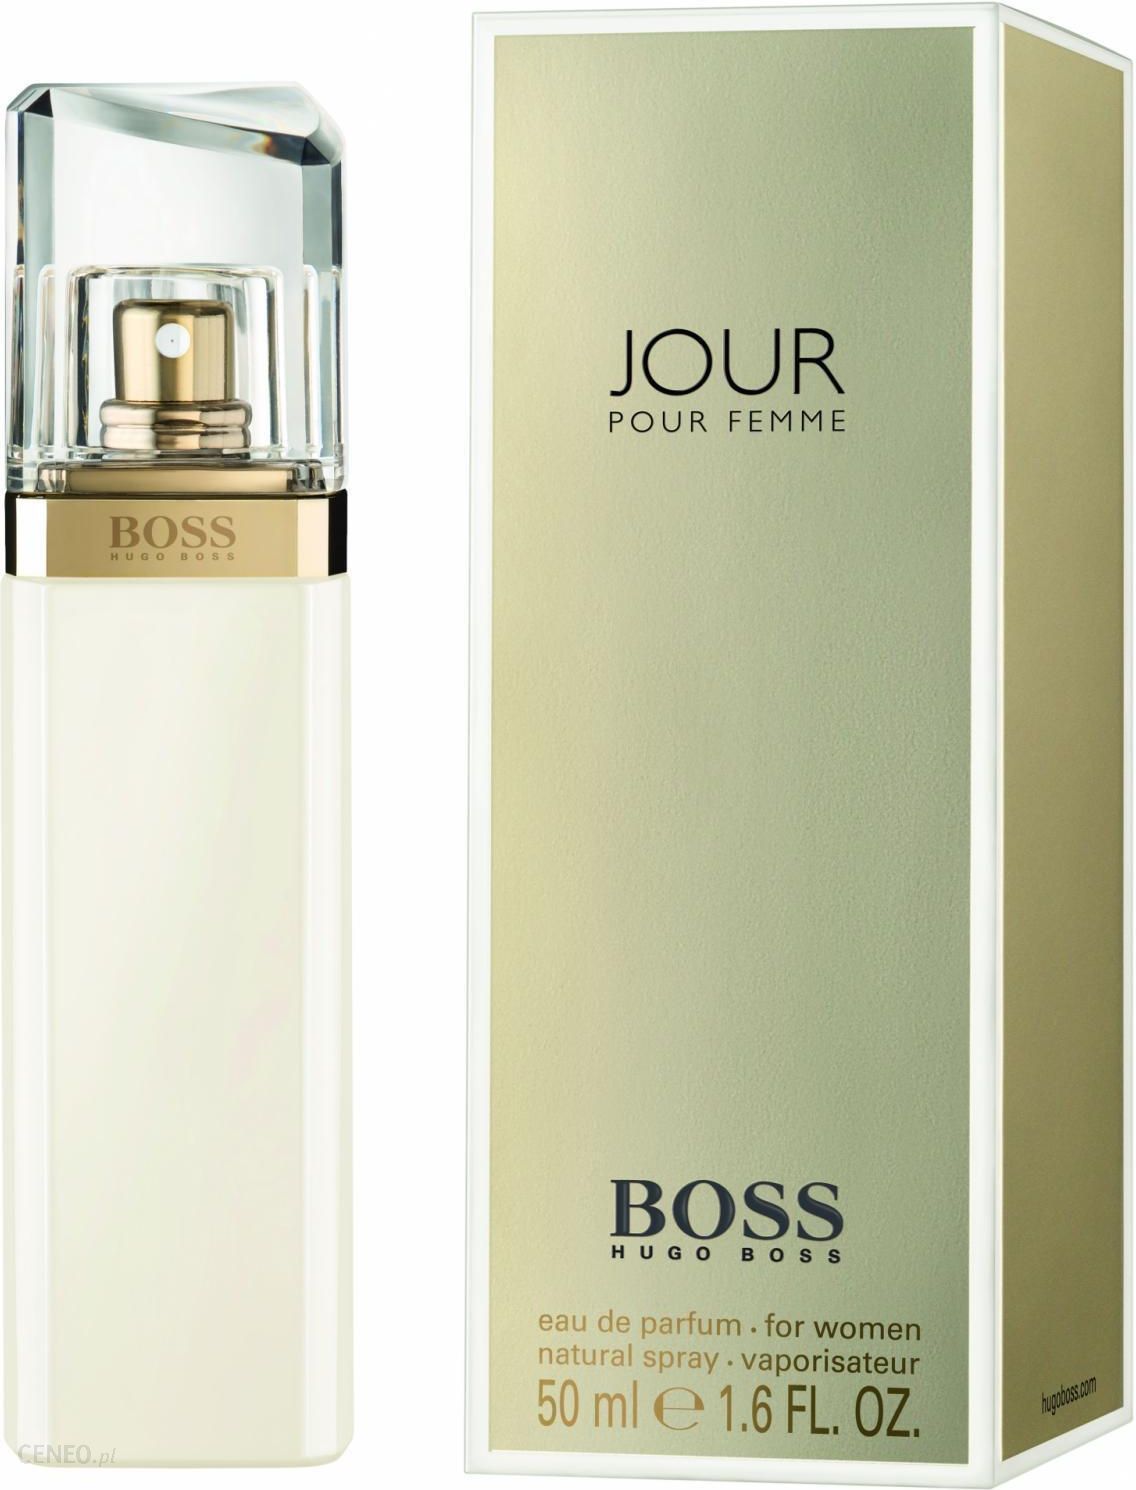 Boss hugo boss описание аромата. Hugo Boss jour 75ml. Хьюго босс женские духи. Hugo Boss духи женские jour. Boss jour pour femme Hugo Boss.